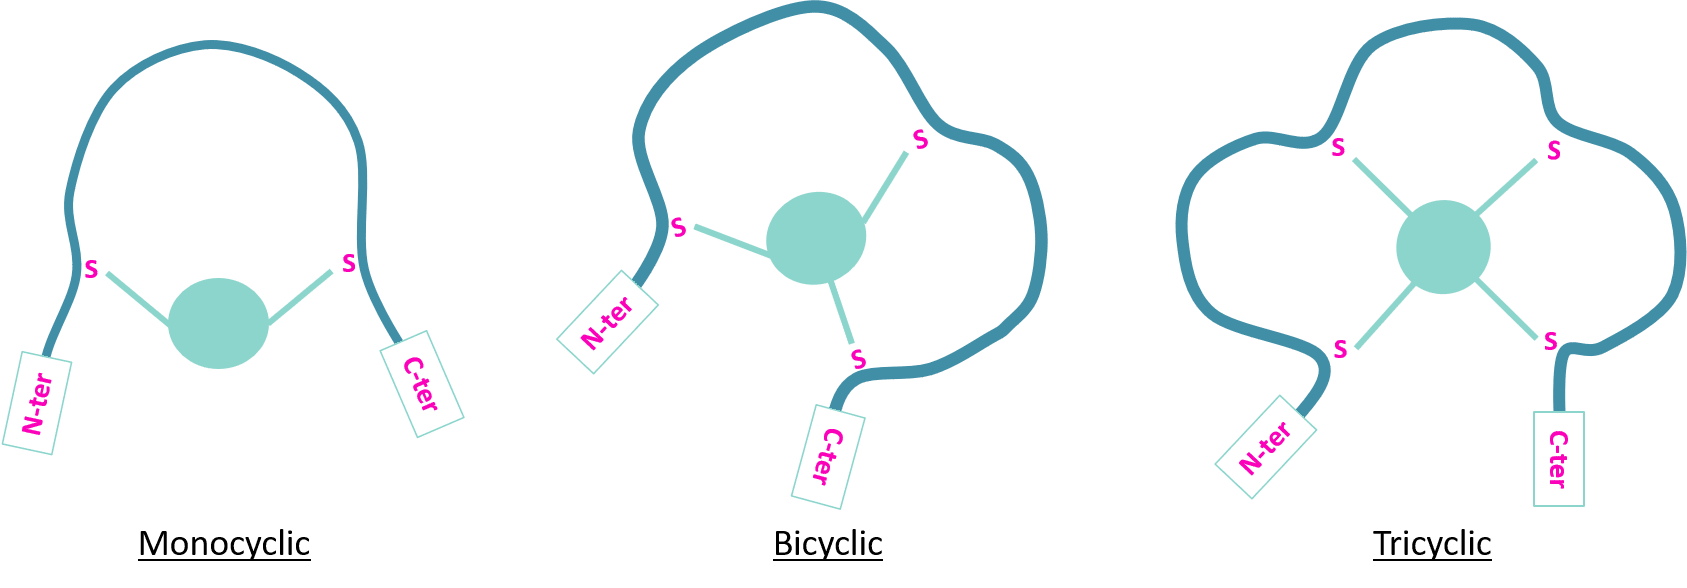 Peptide cyclization